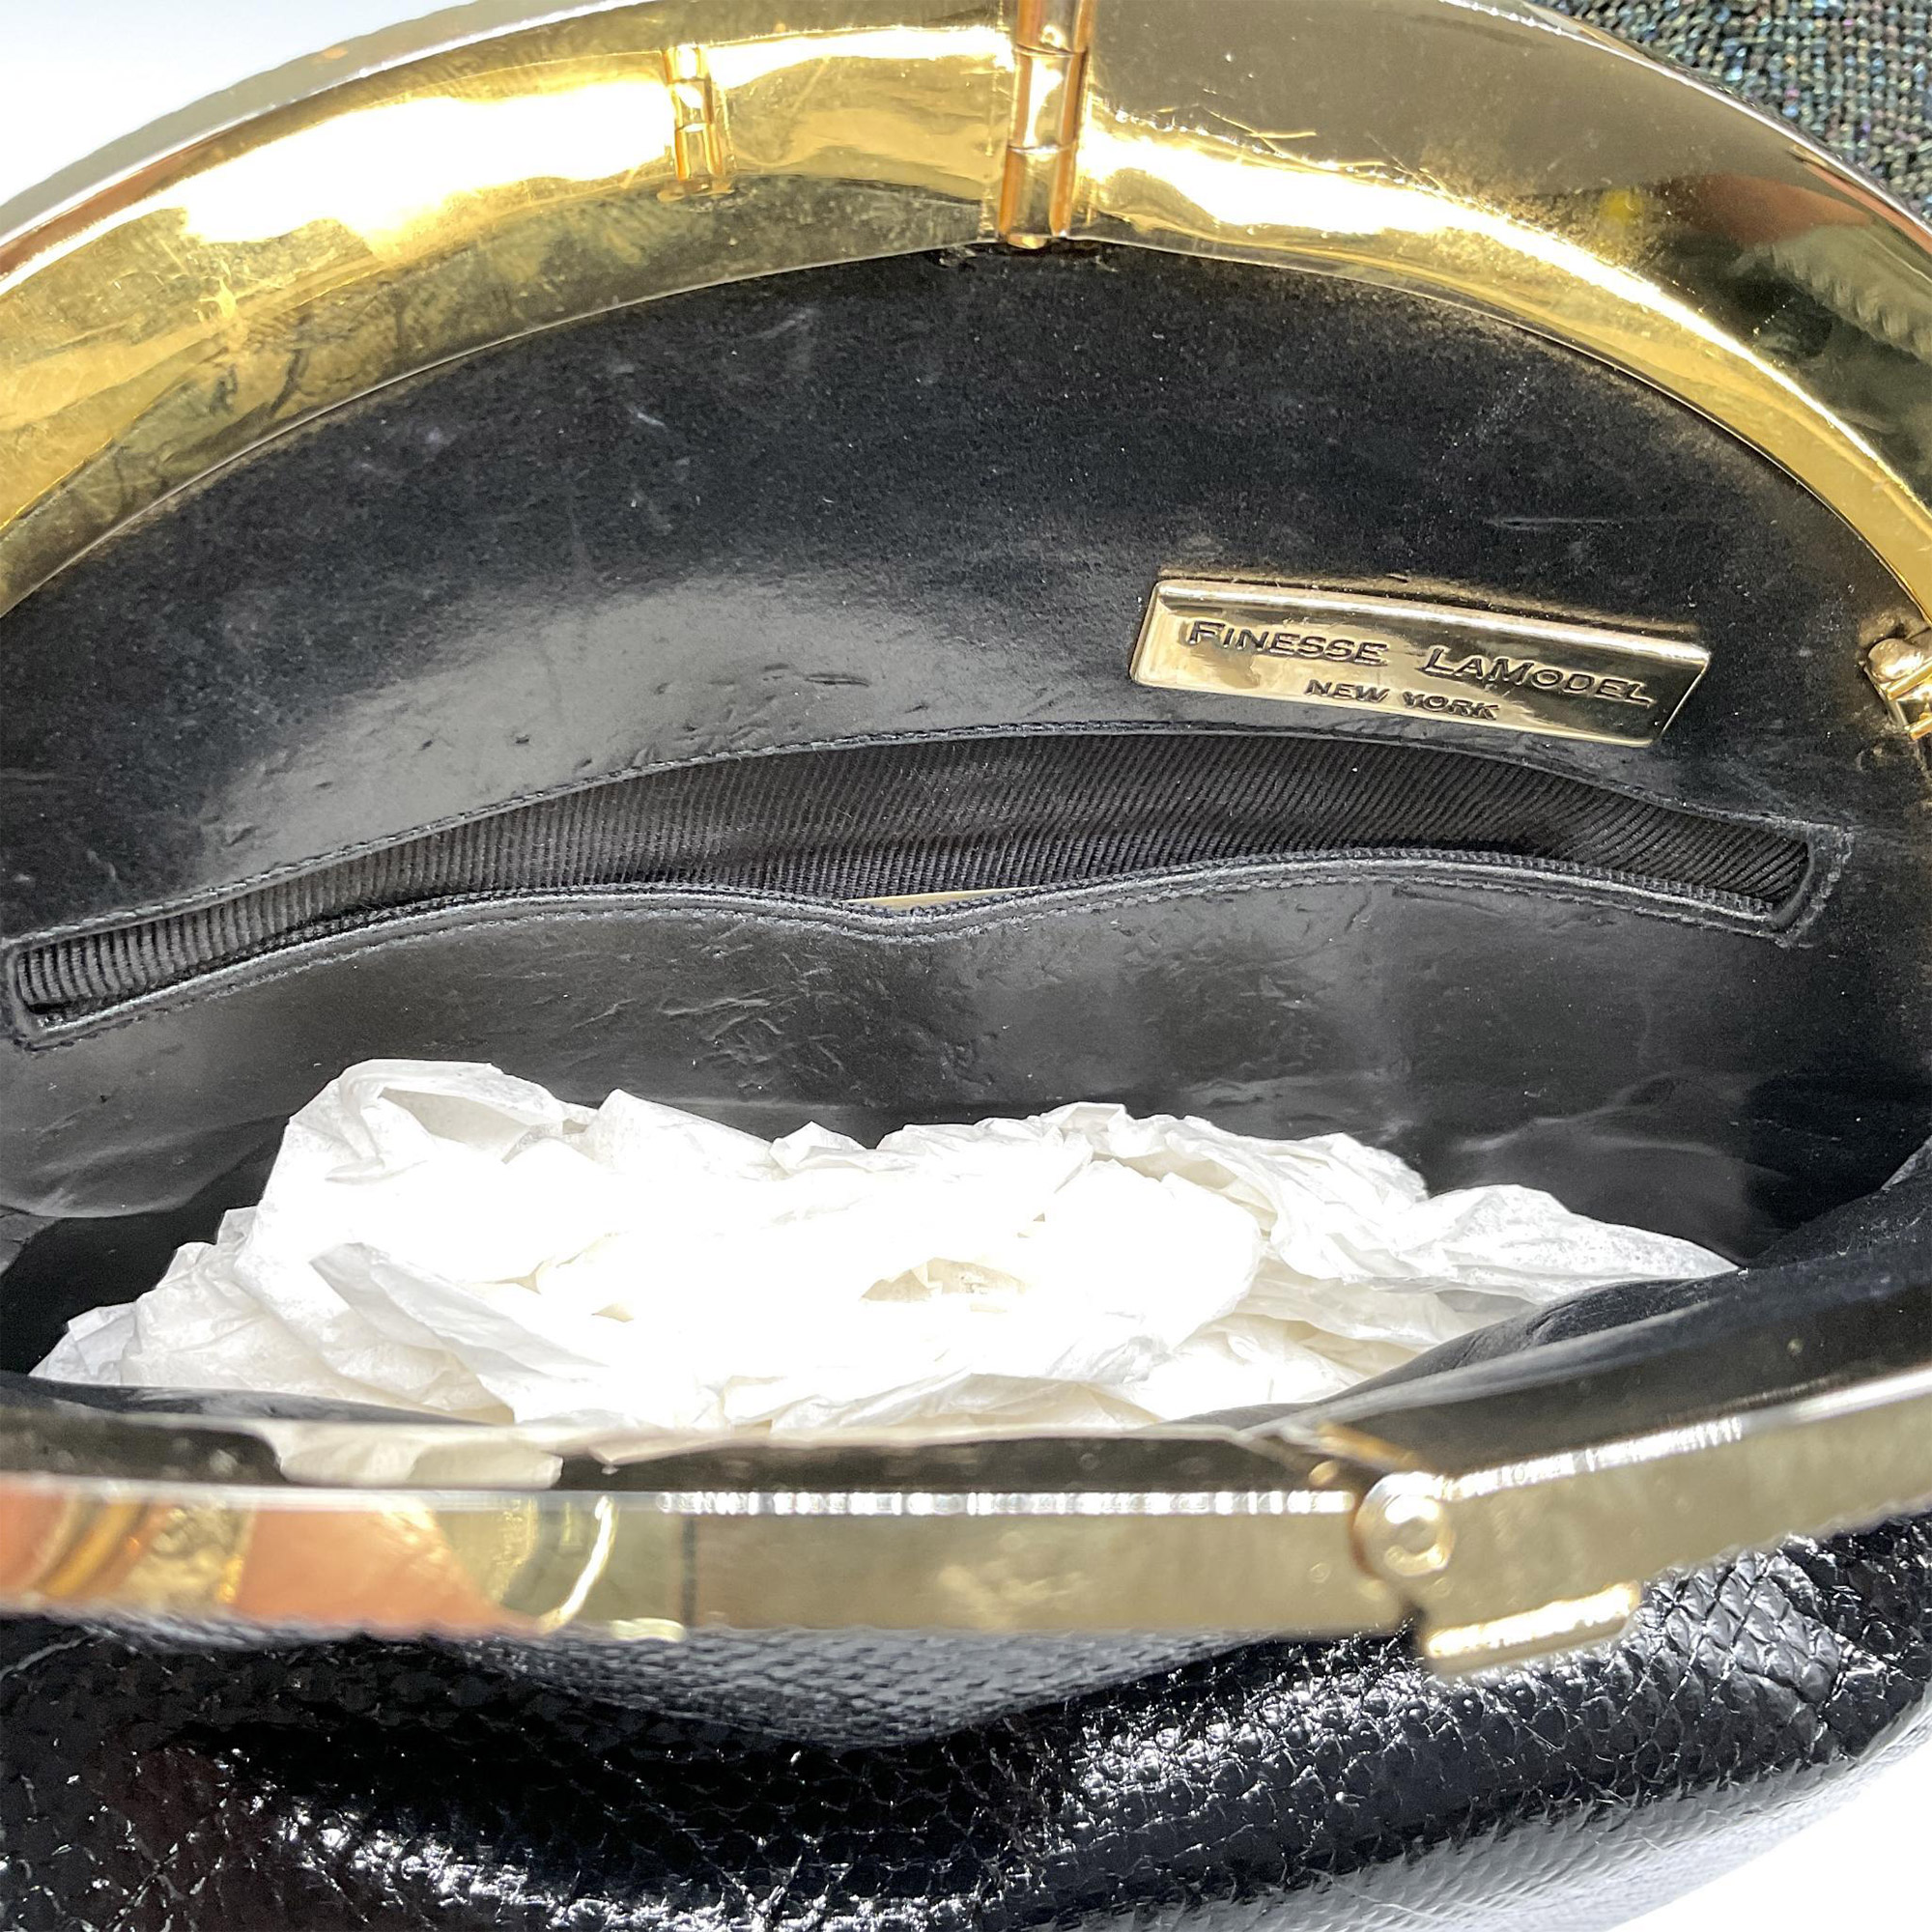 2pc Finesse LaModel Snakeskin Karung Bag + Beaded Handbag - Image 3 of 4